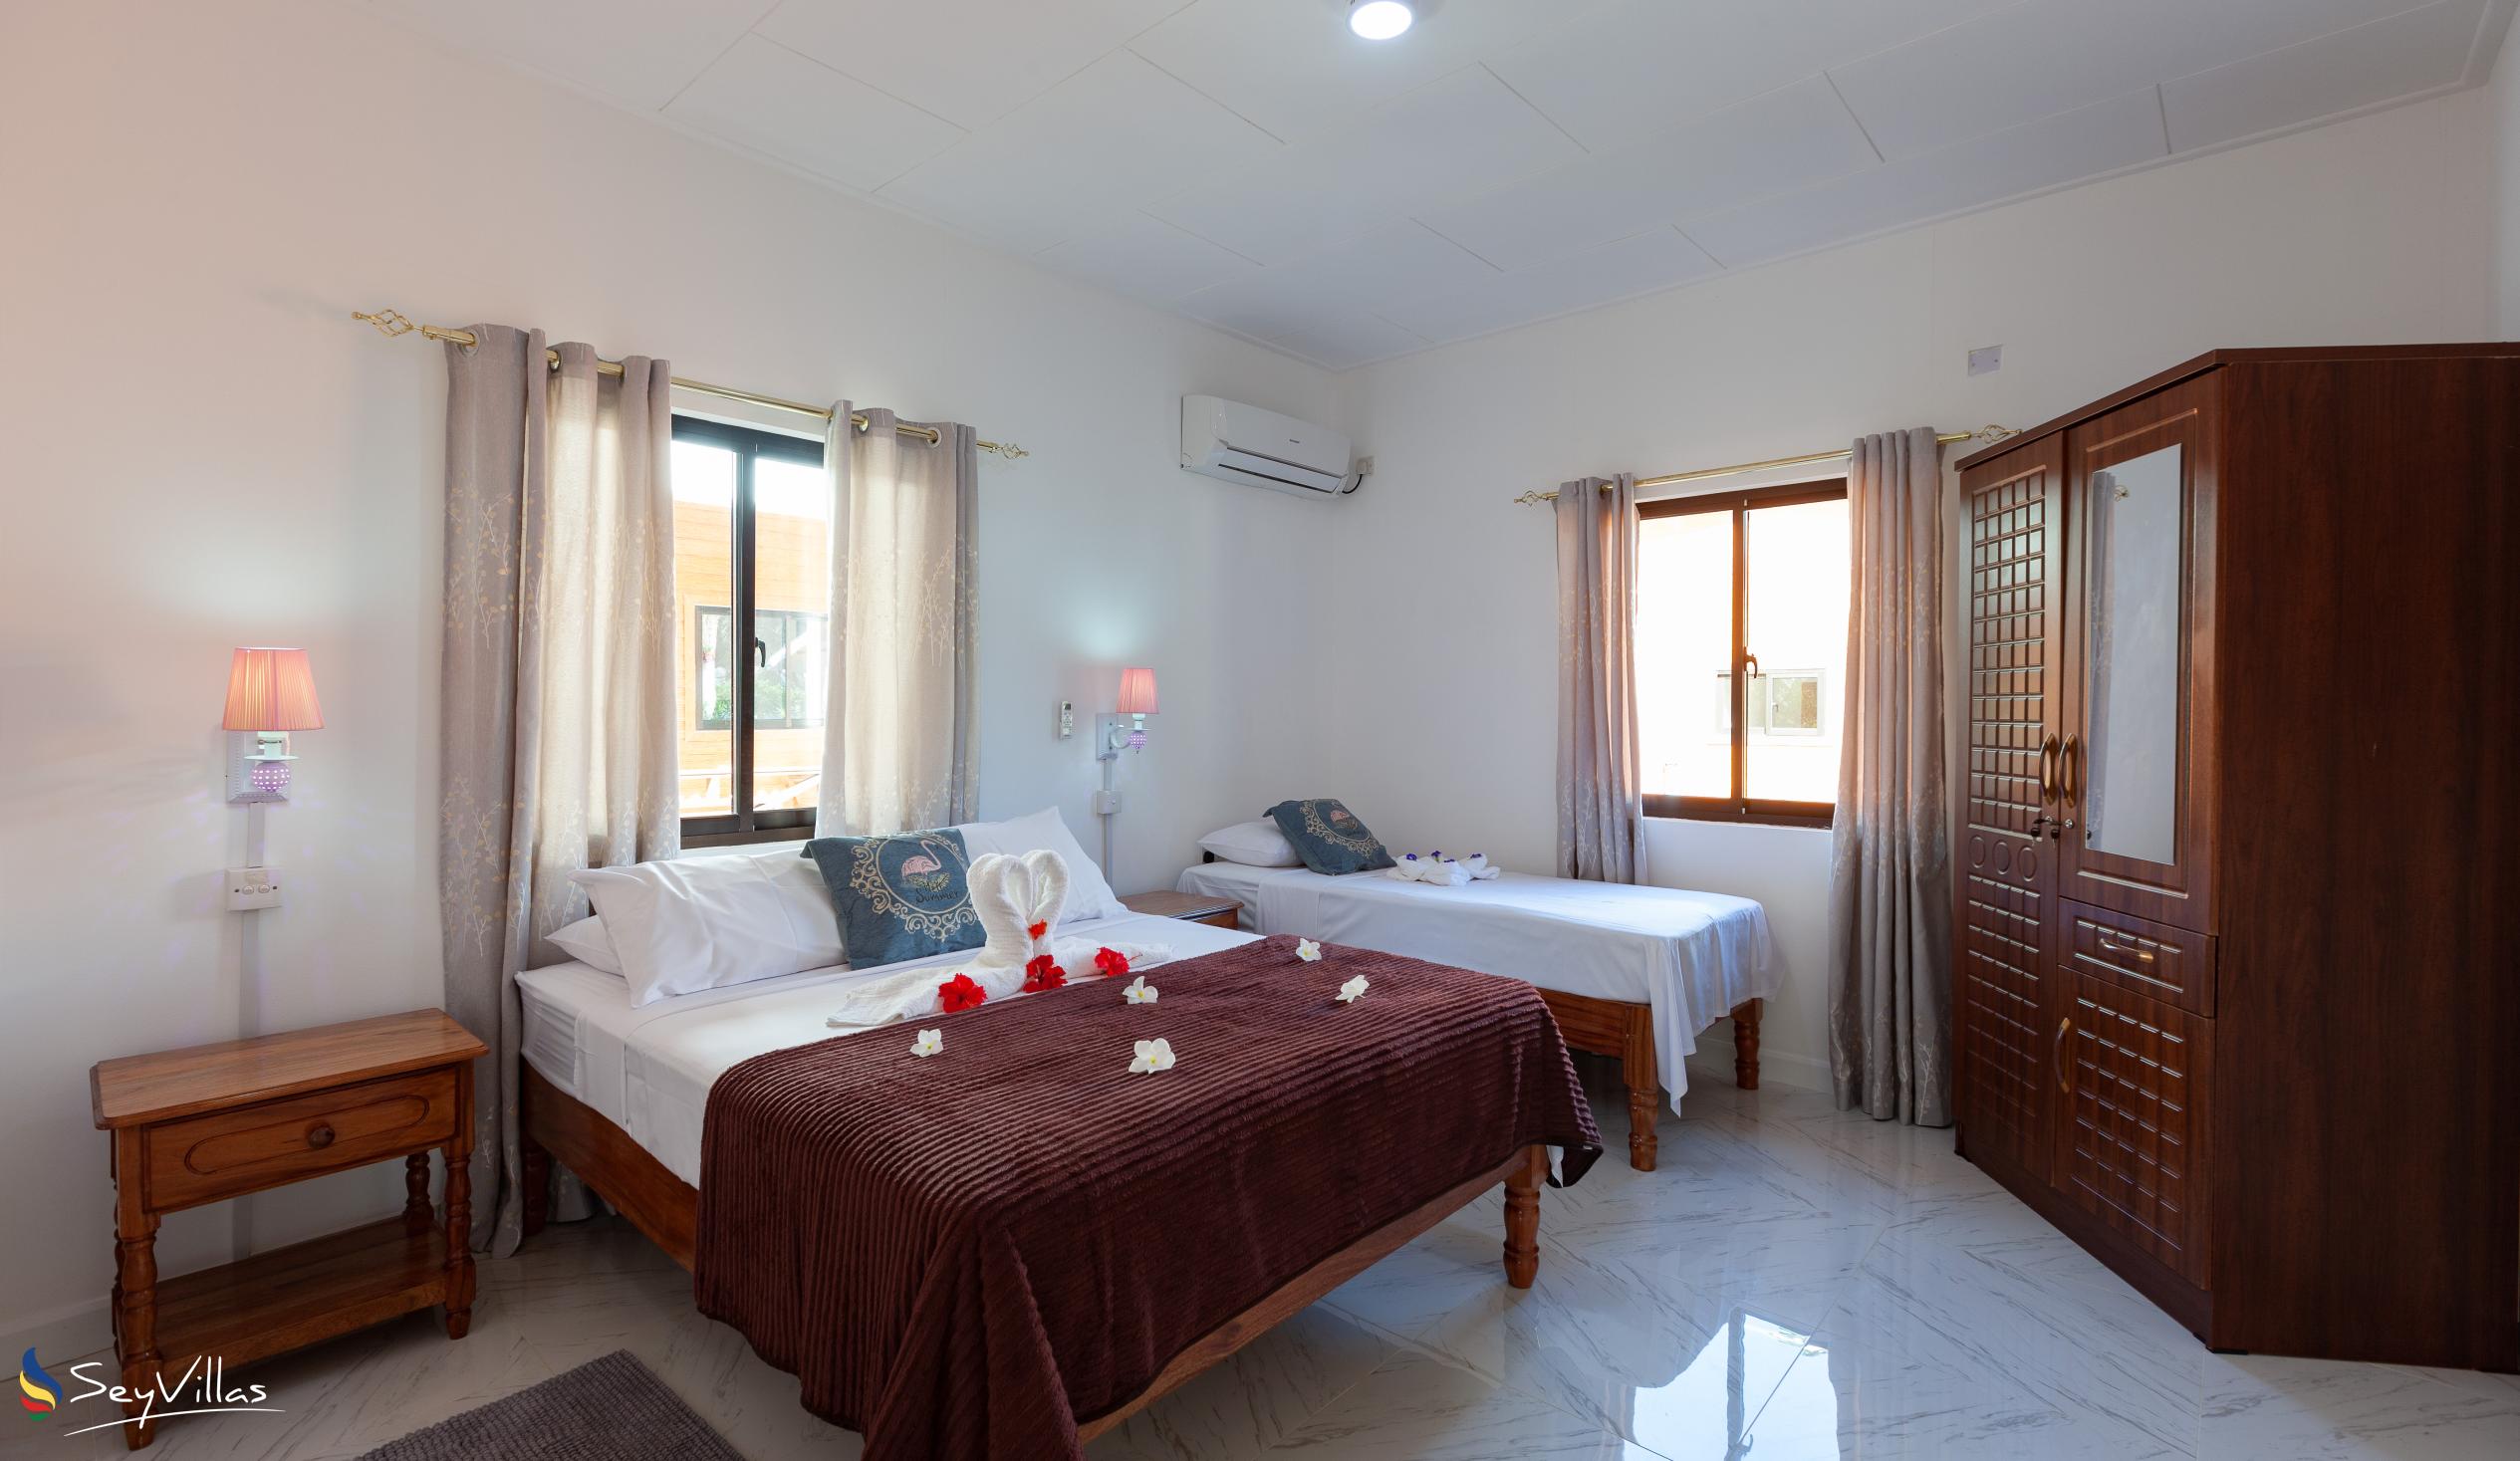 Photo 68: Anse Grosse Roche Beach Villa - 1-Bedroom Apartment - La Digue (Seychelles)